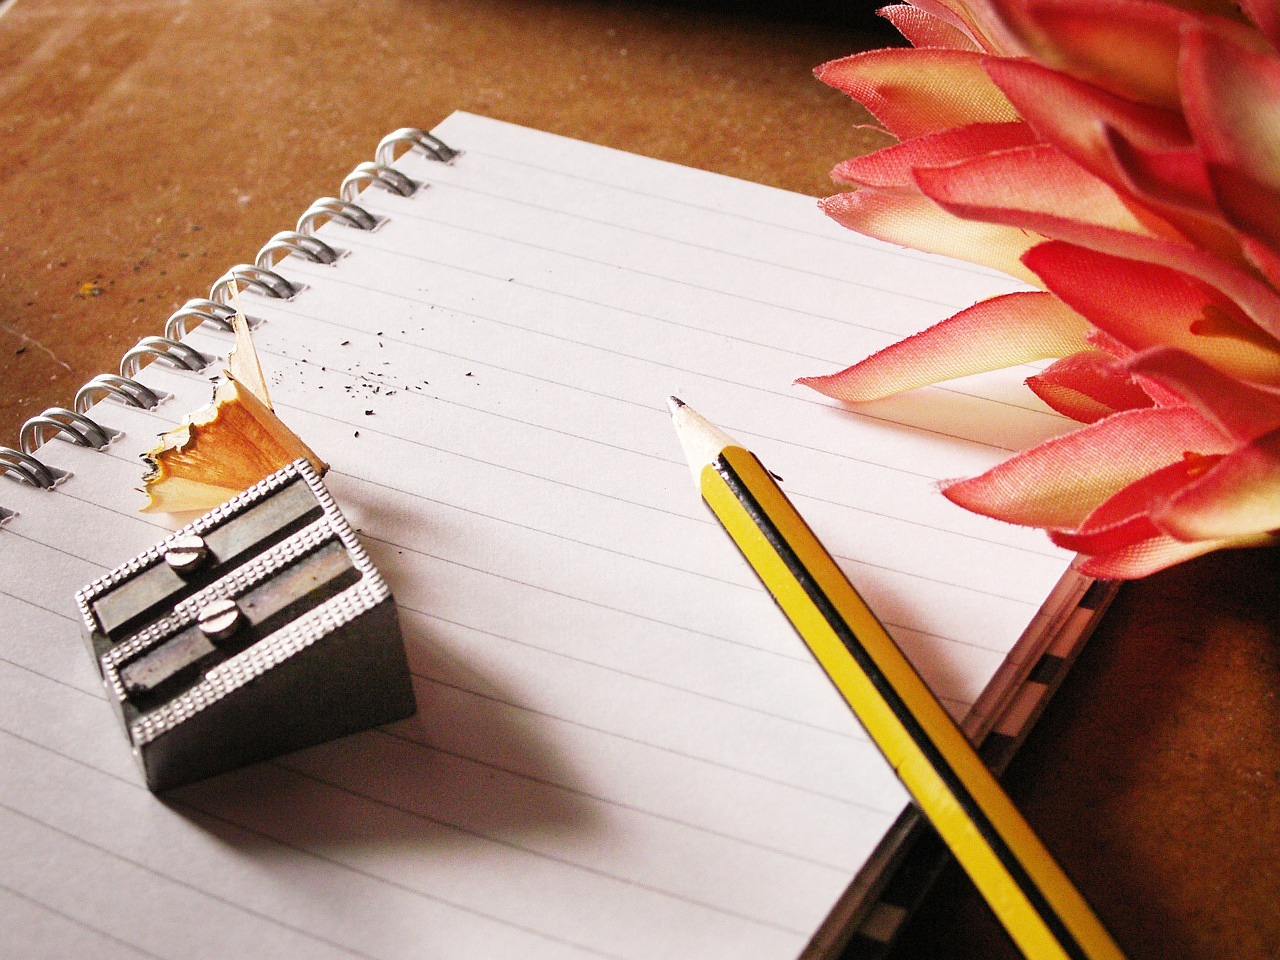 https://pixabay.com/photos/pencil-notebook-writing-notes-17808/